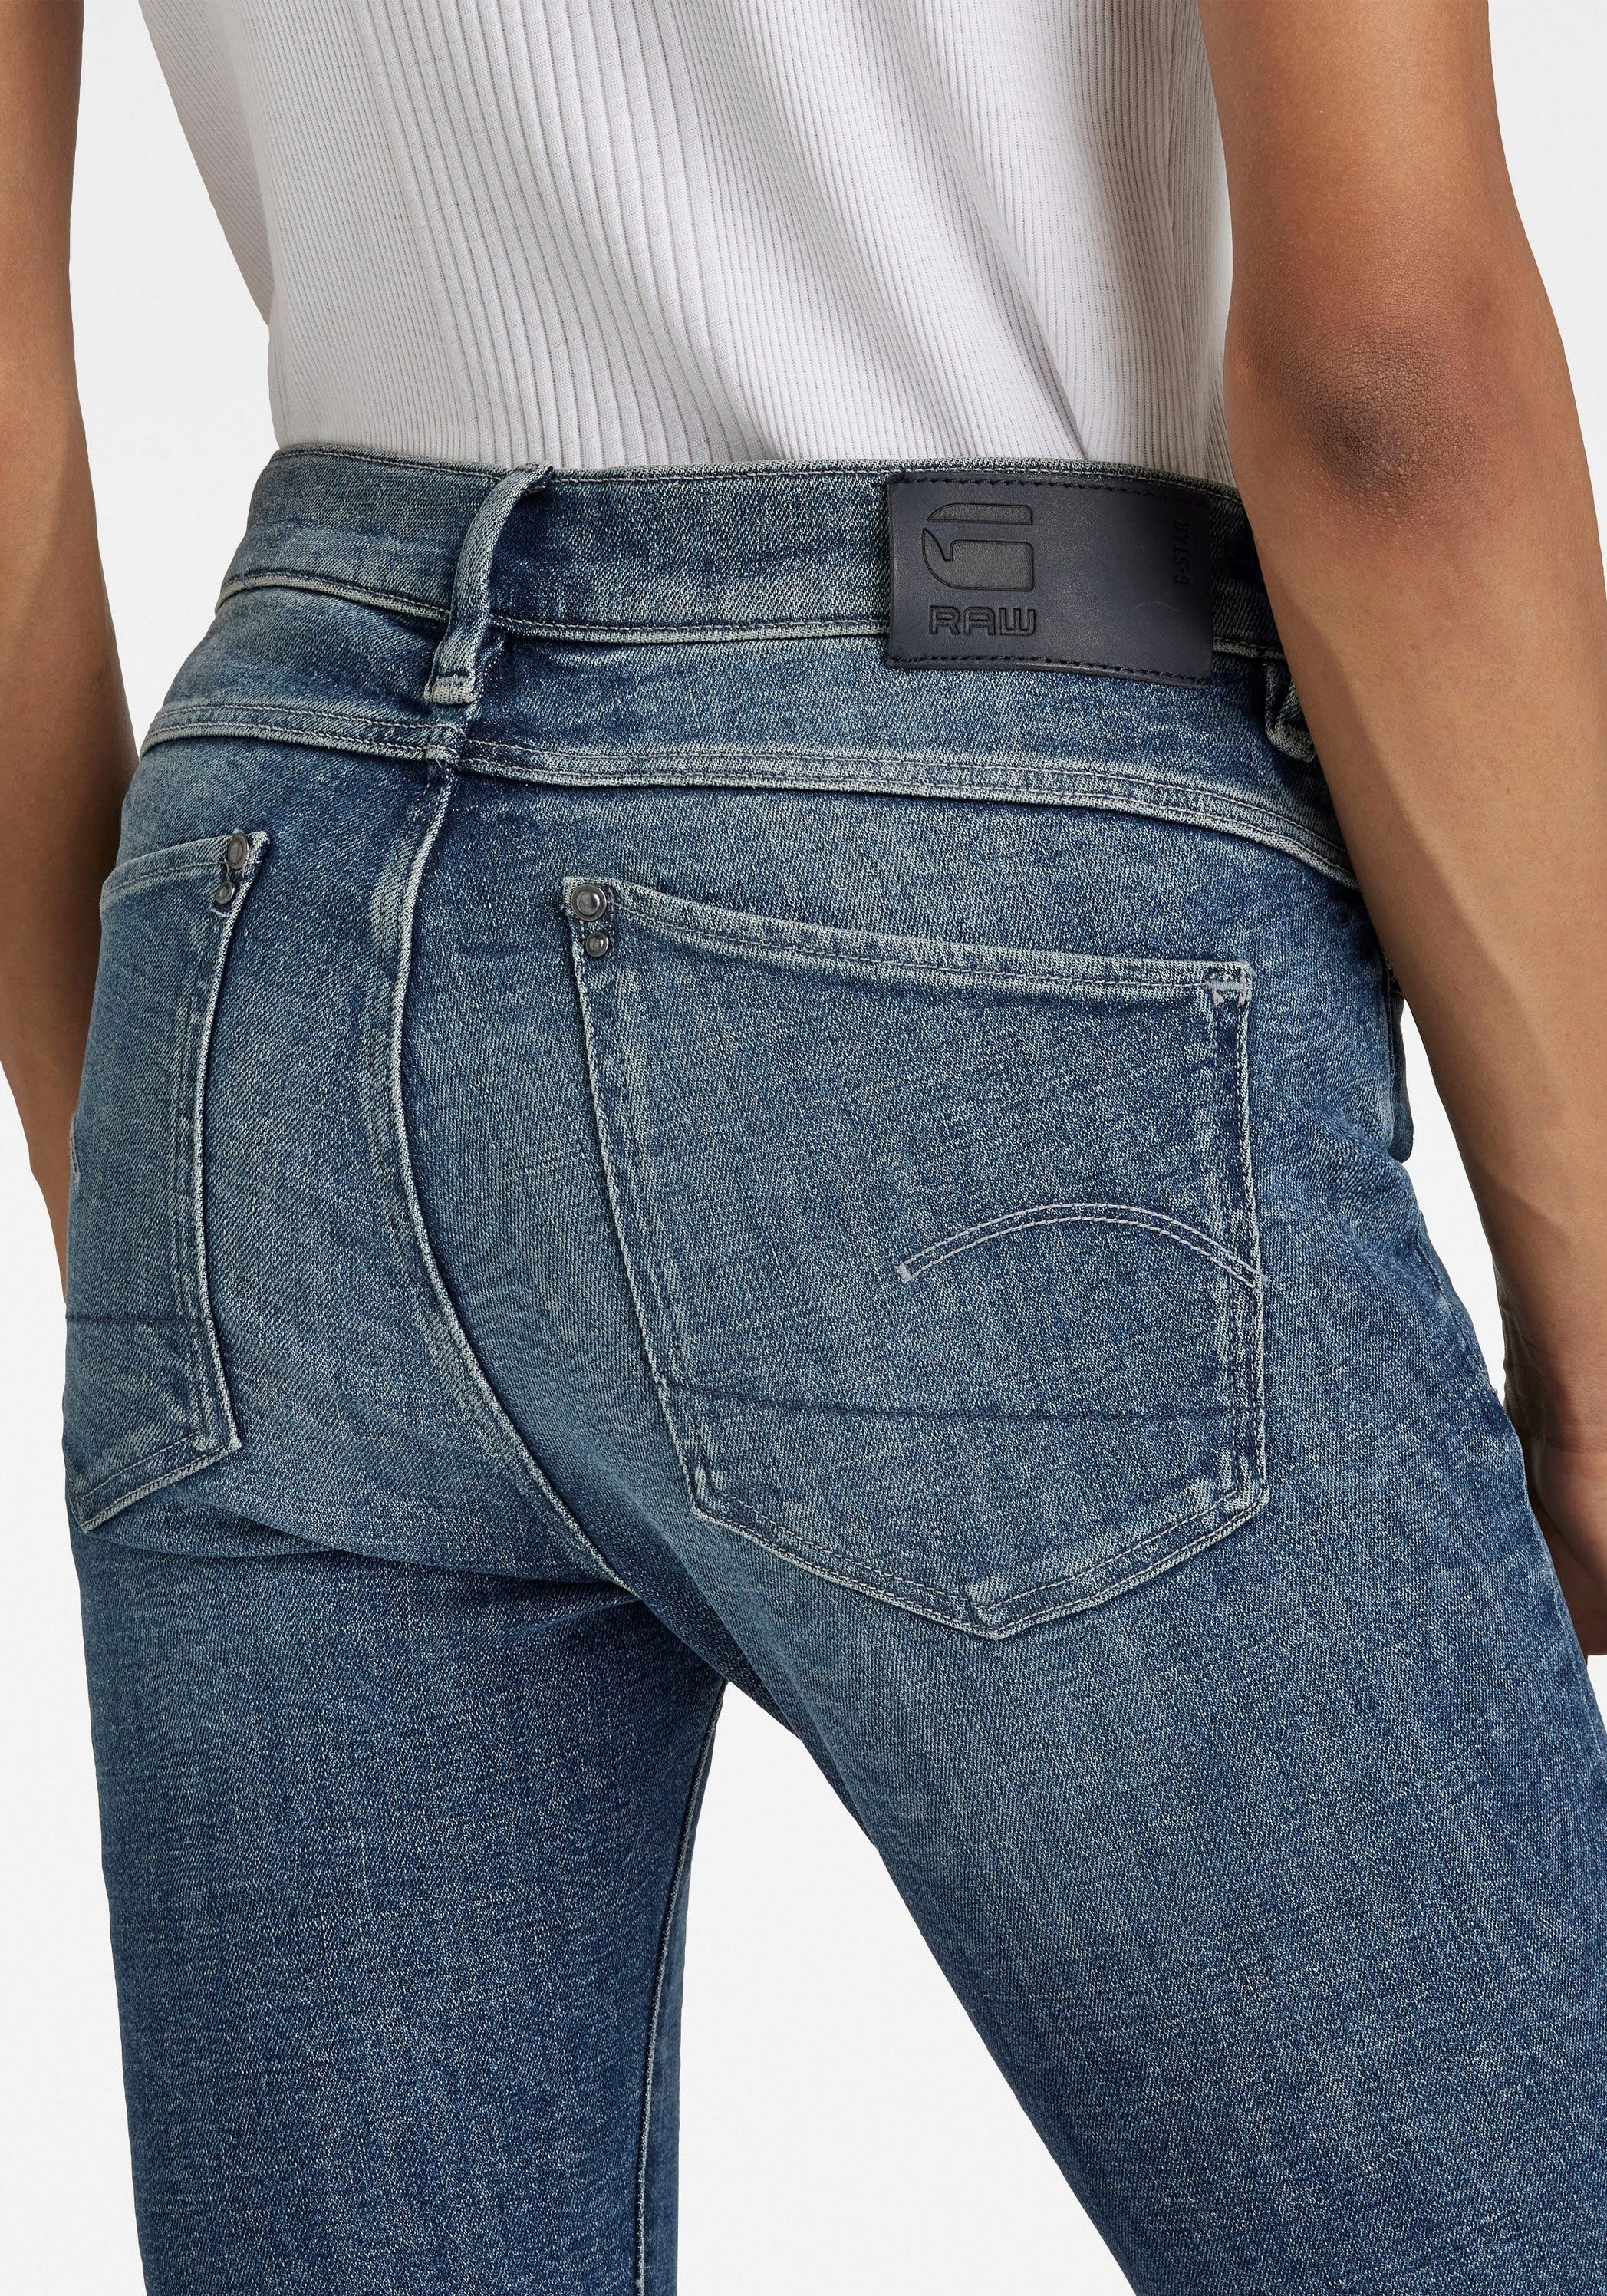 RAW cascade (mid durch Wohlfühlfaktor Stretchanteil G-Star faded blue) Skinny-fit-Jeans mit